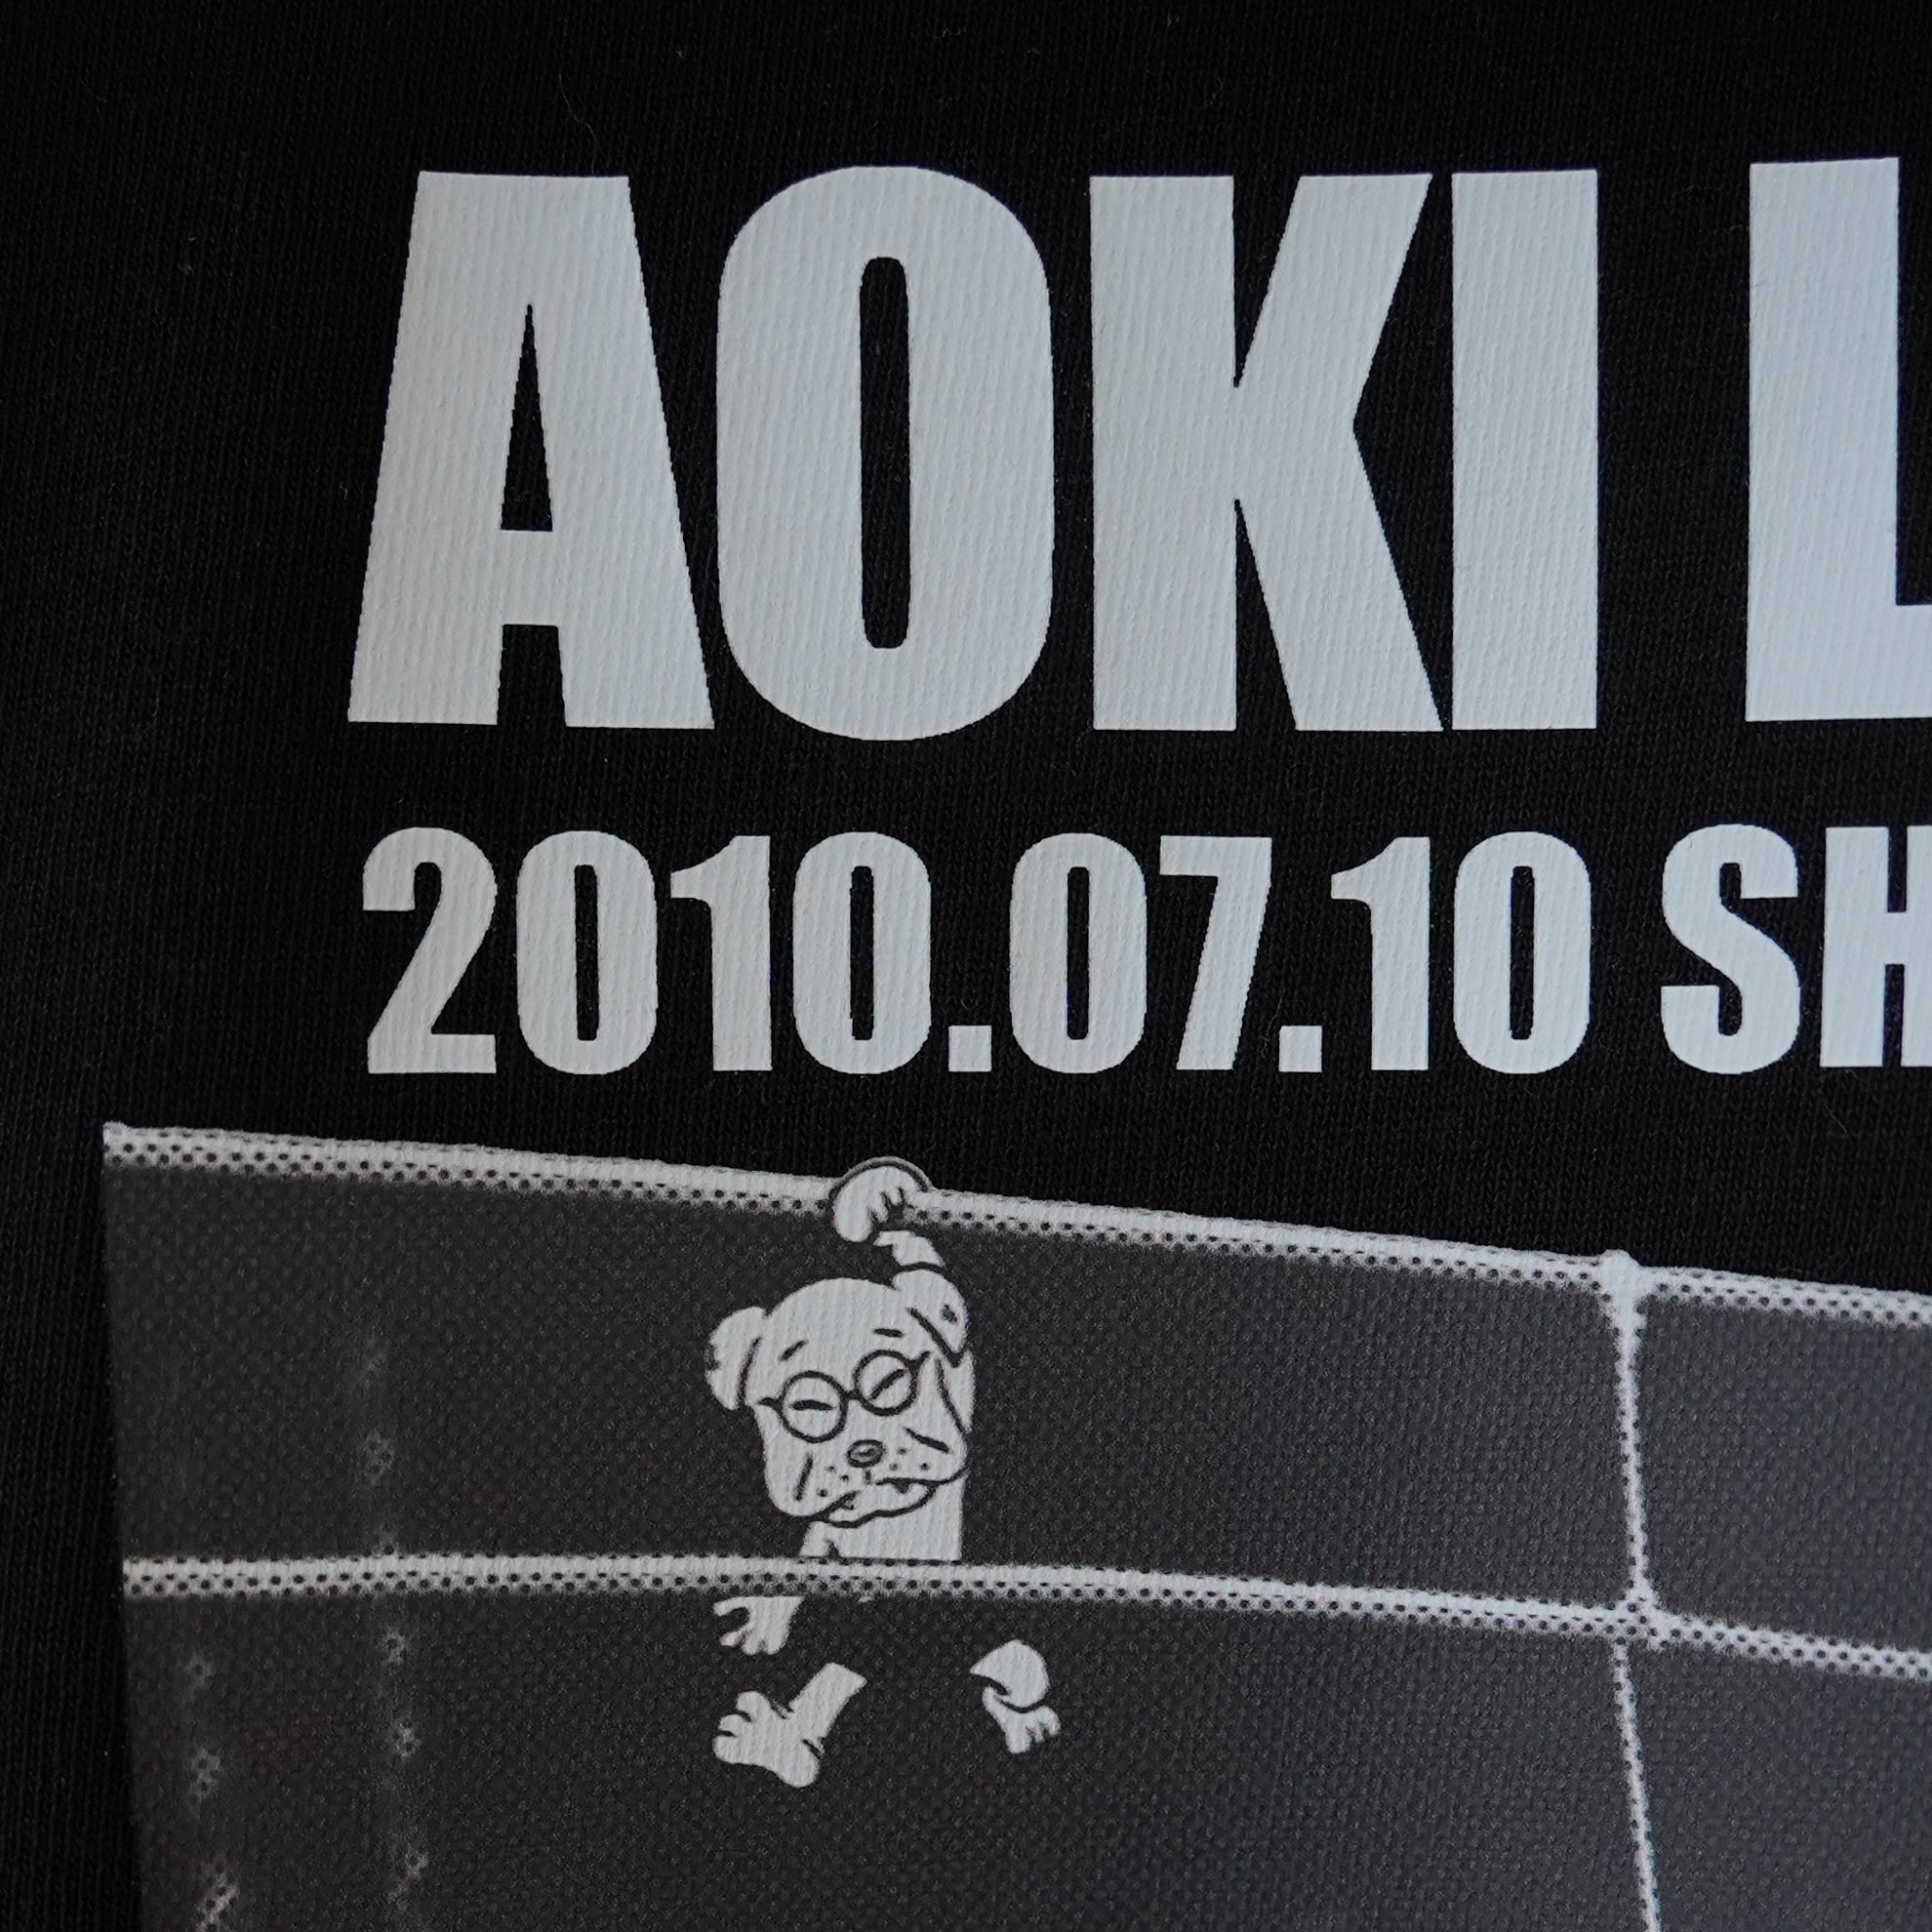 AOKI LOCK LONG SLEEVE T Shirts / Shinya Aoki